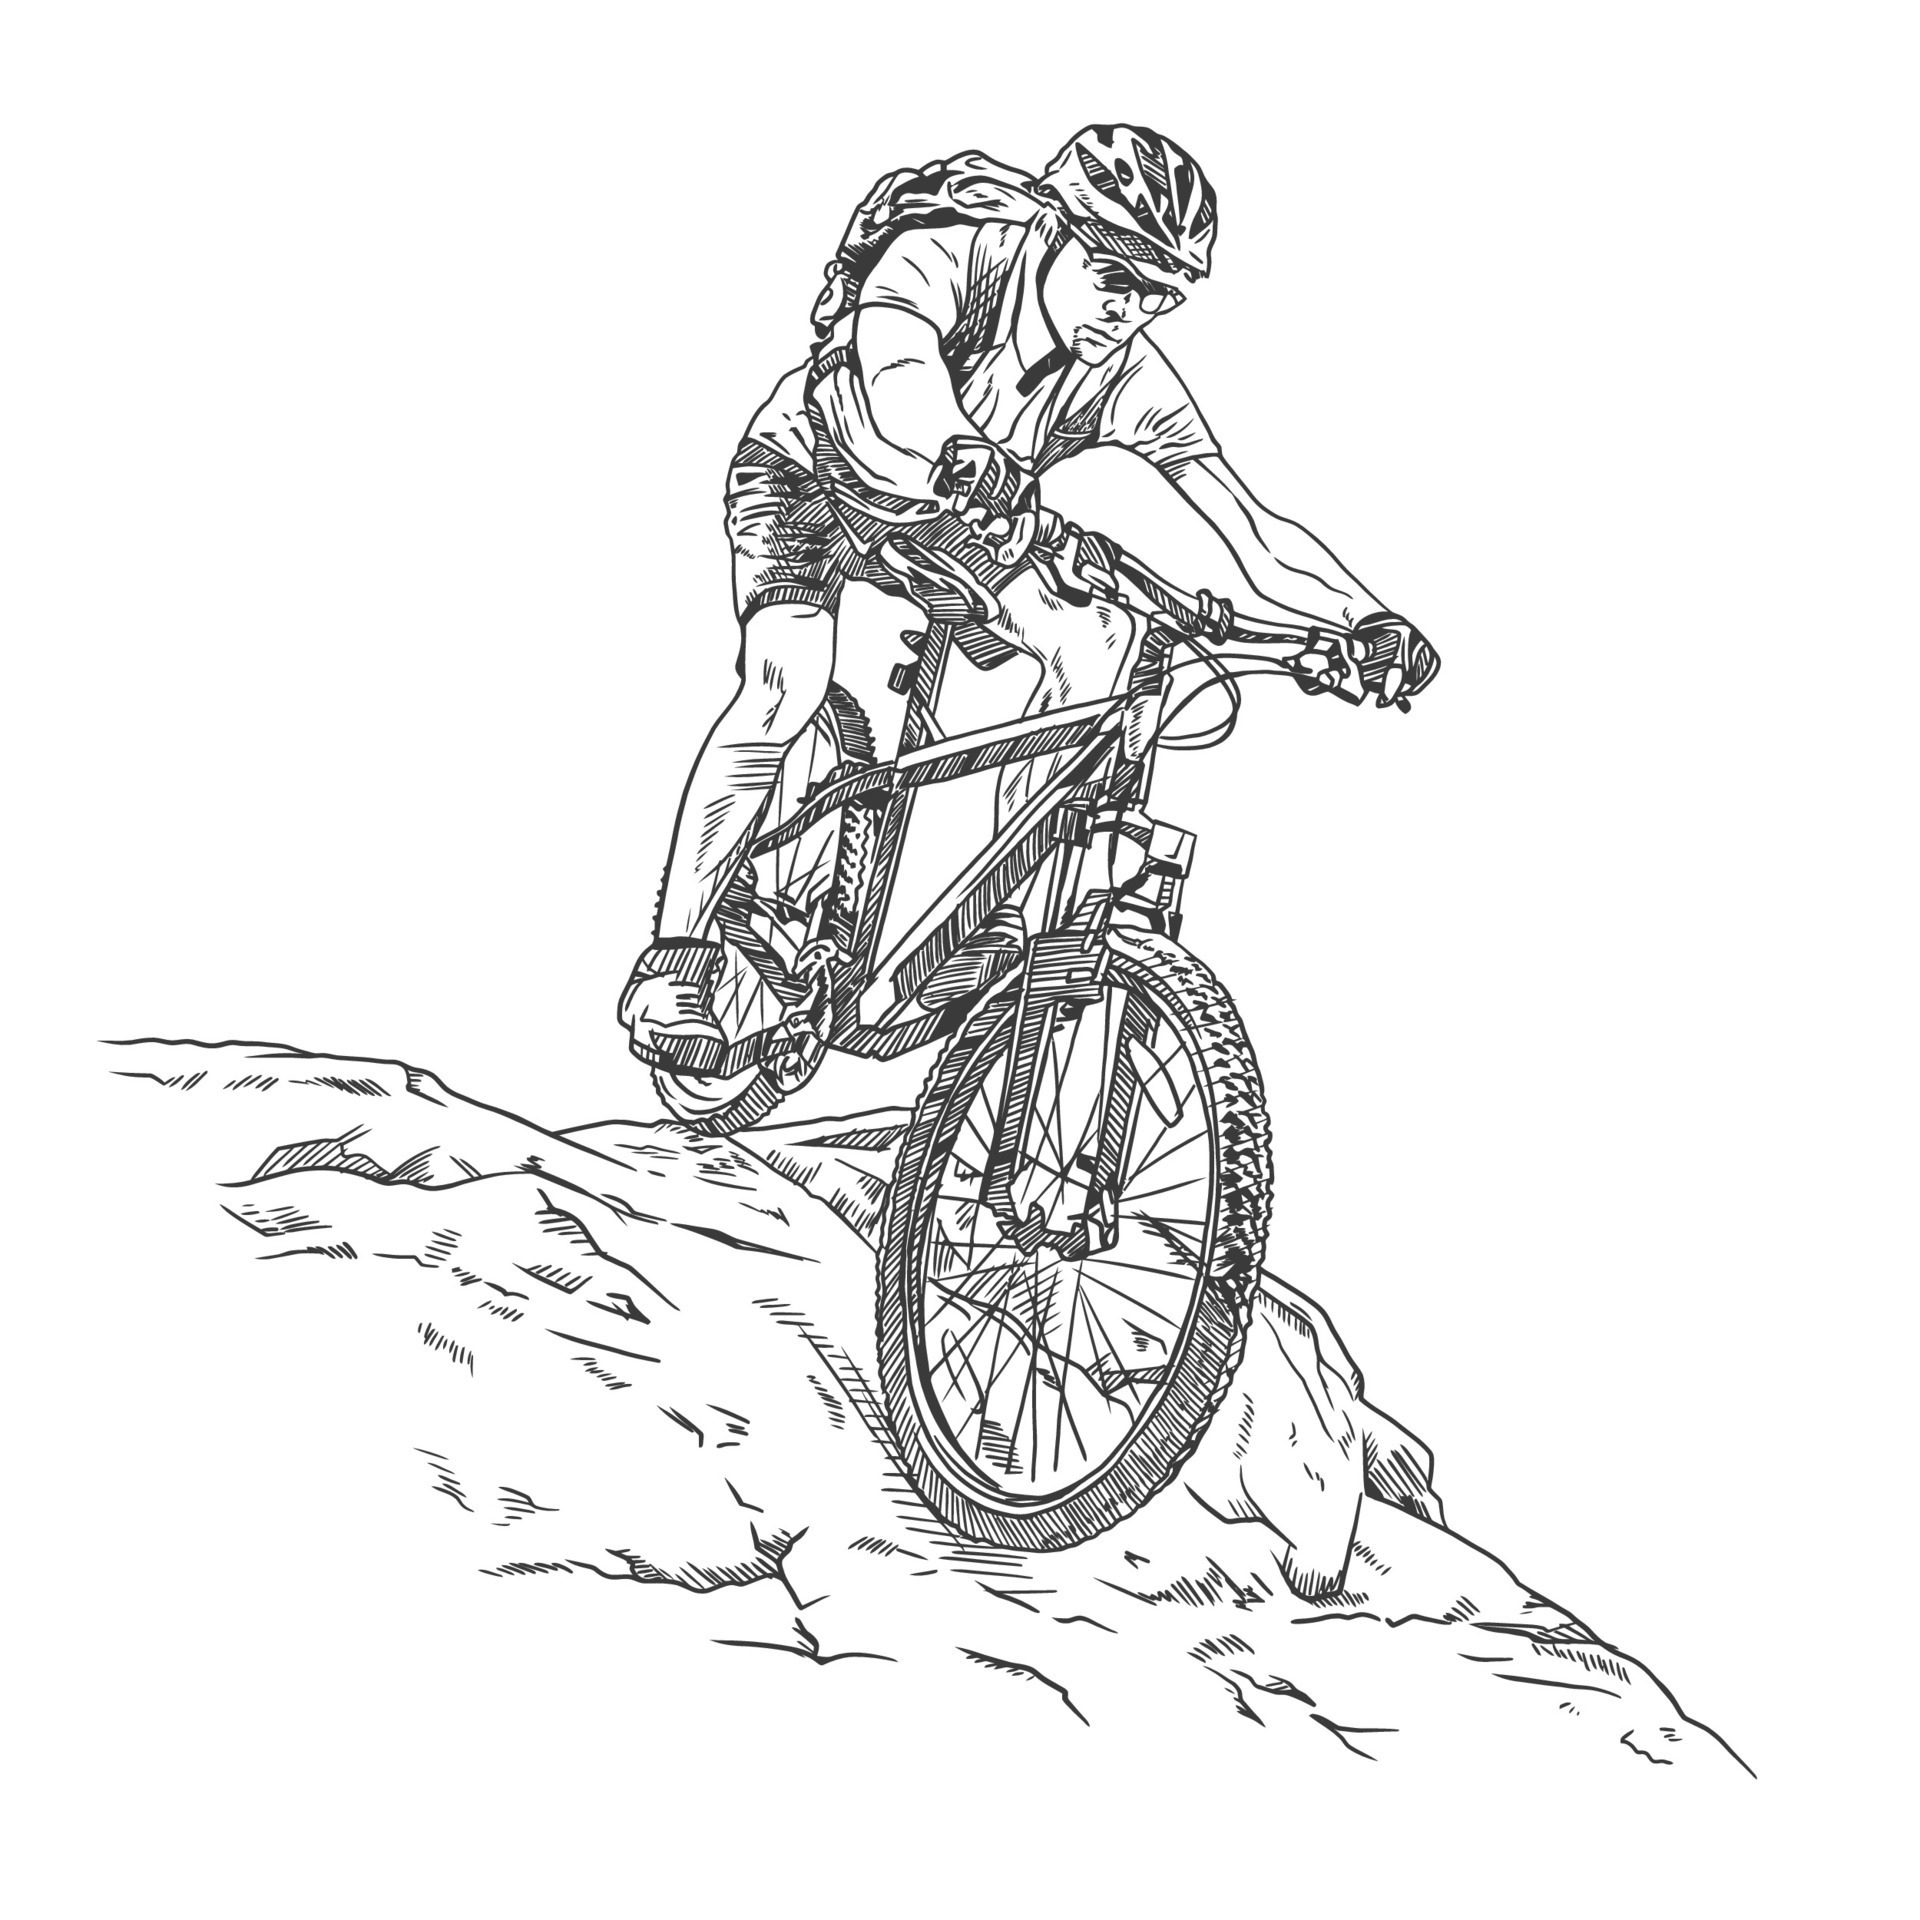 6045 Cyclist Sketch Images Stock Photos  Vectors  Shutterstock